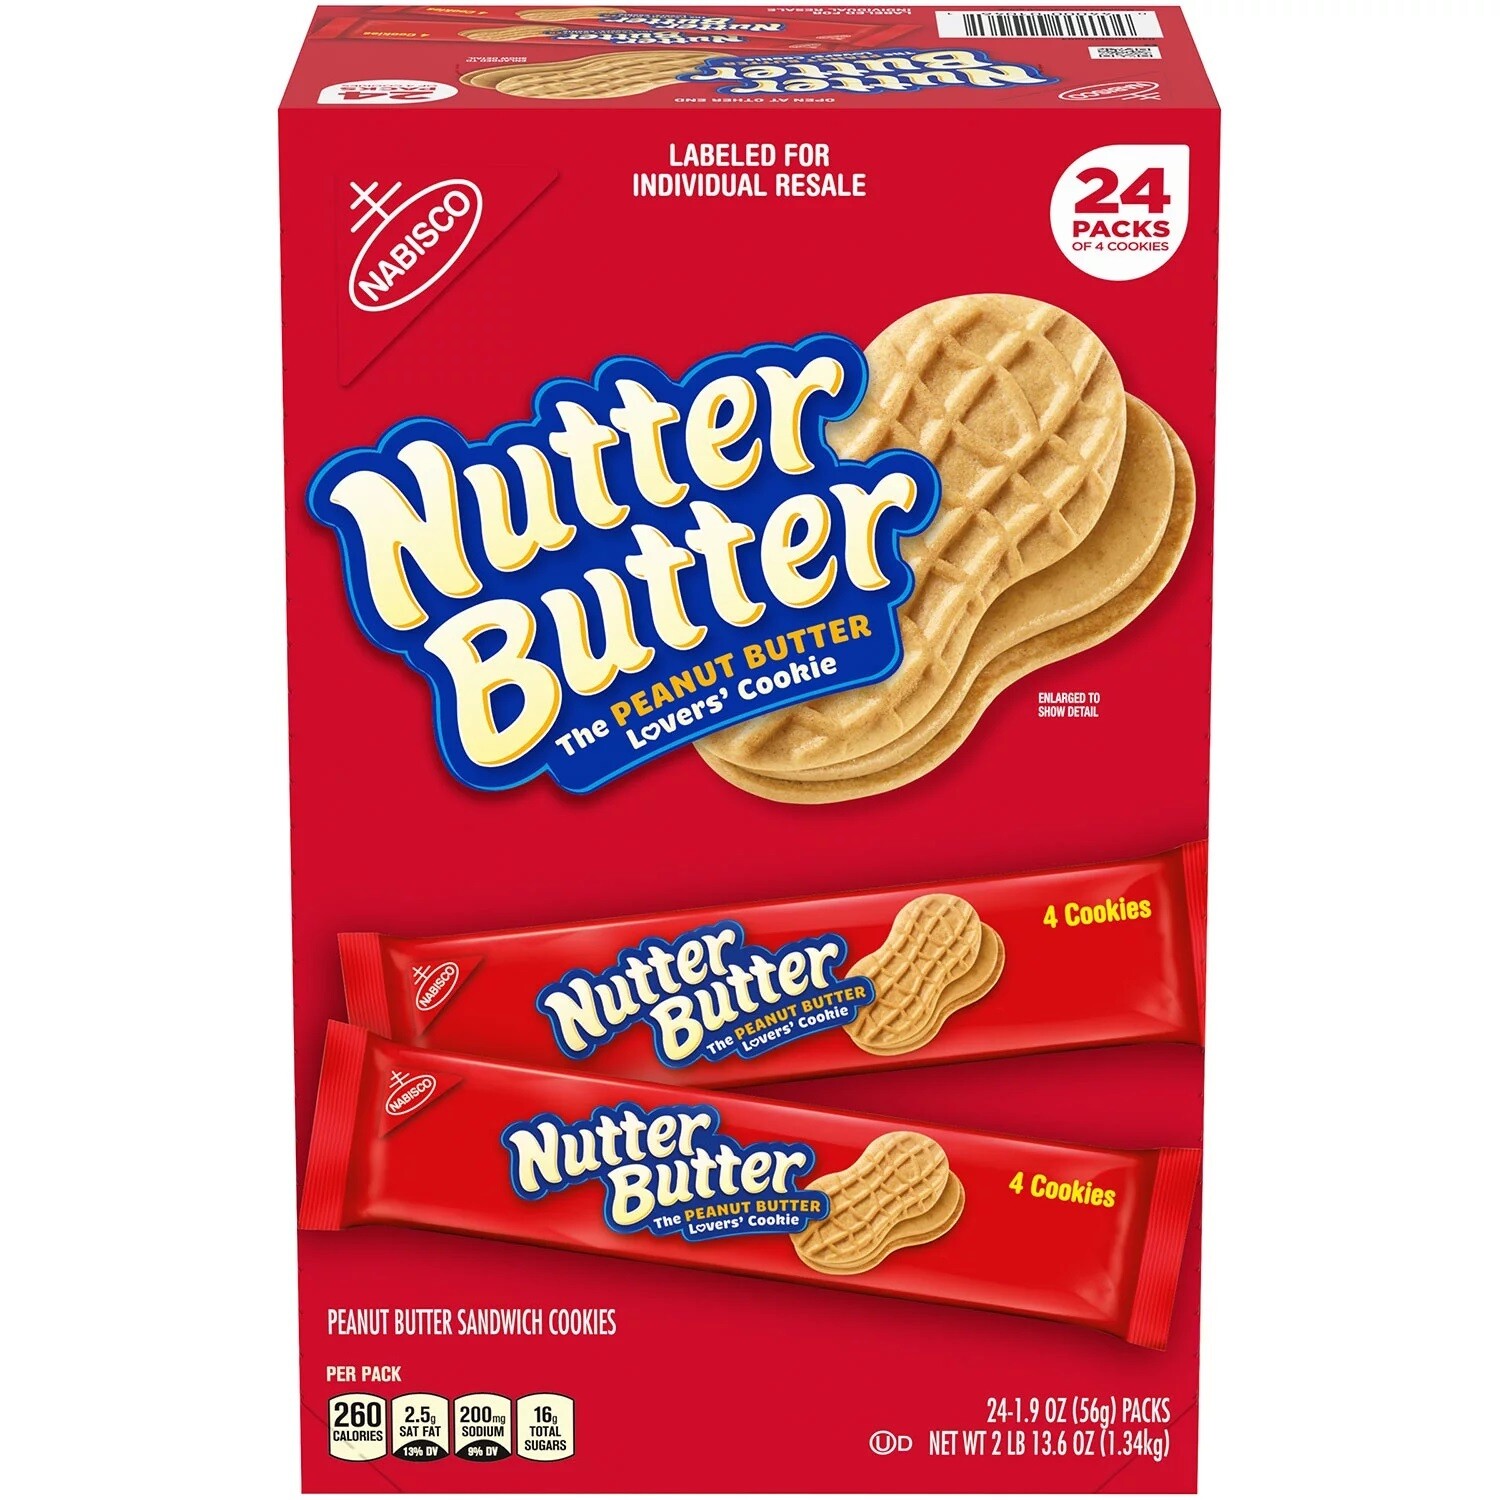 Nutter Butter 24ct